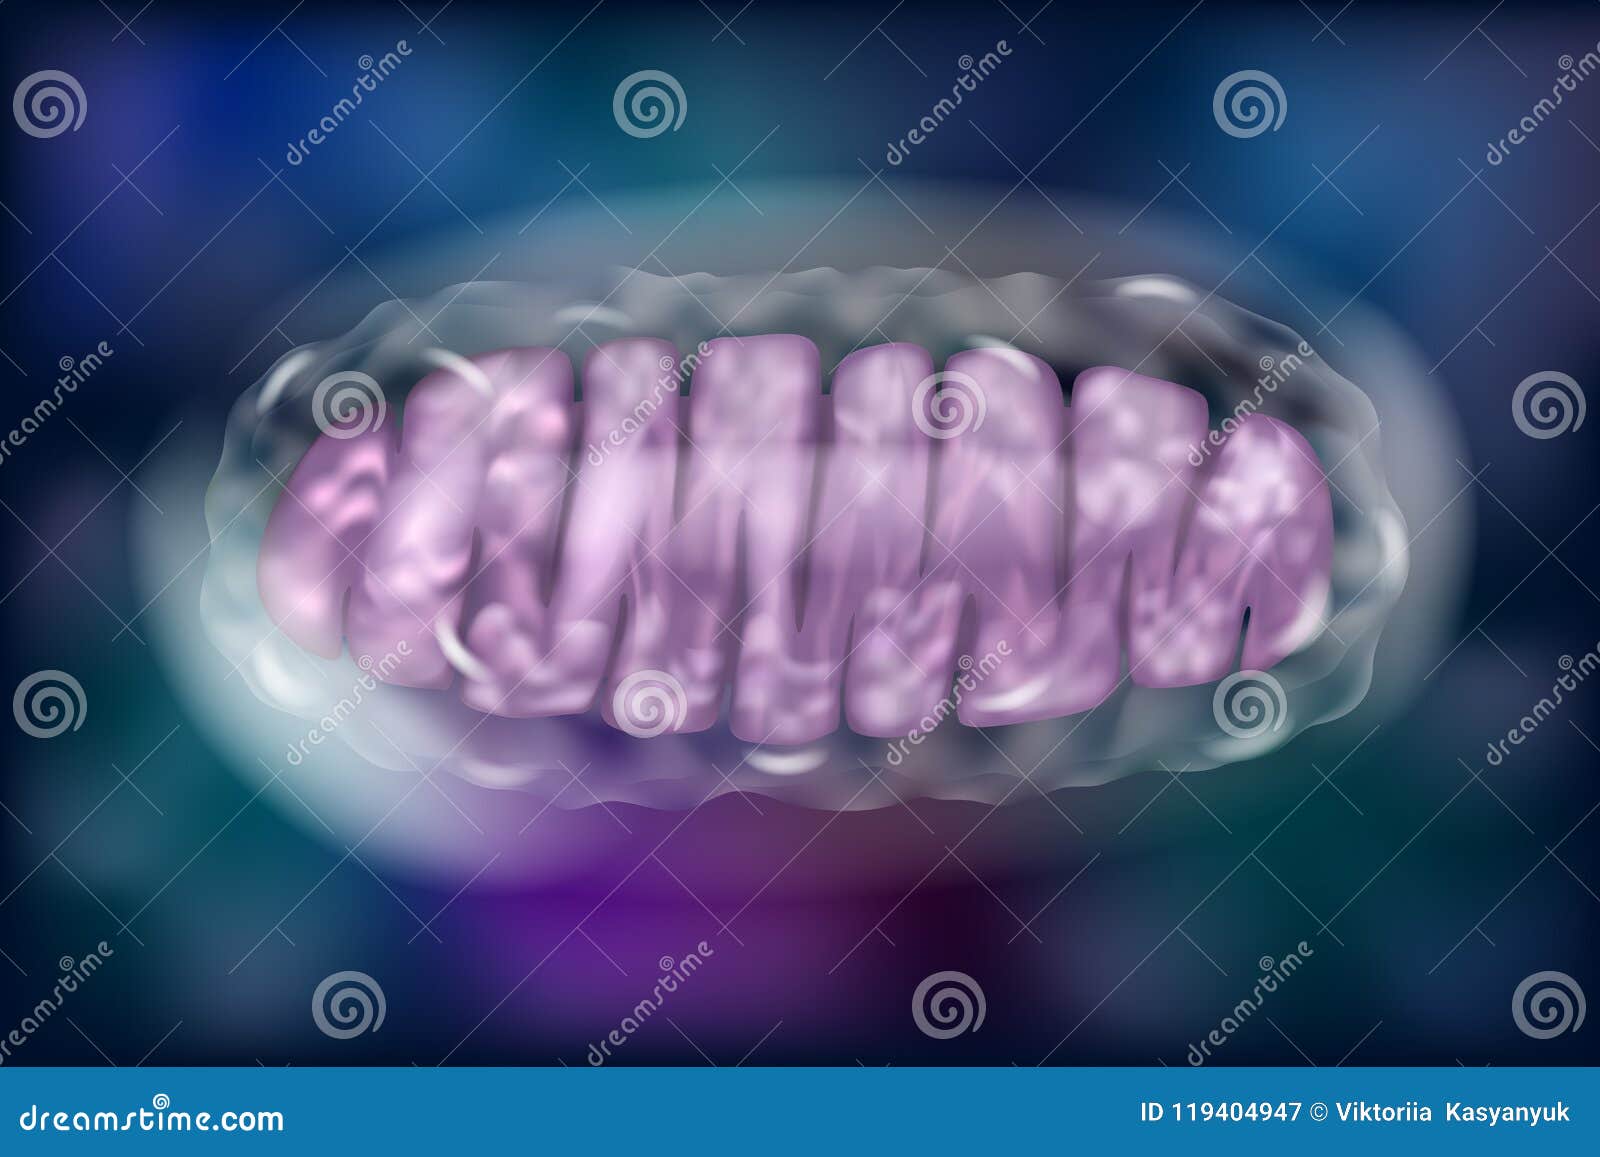 typical mitochondria